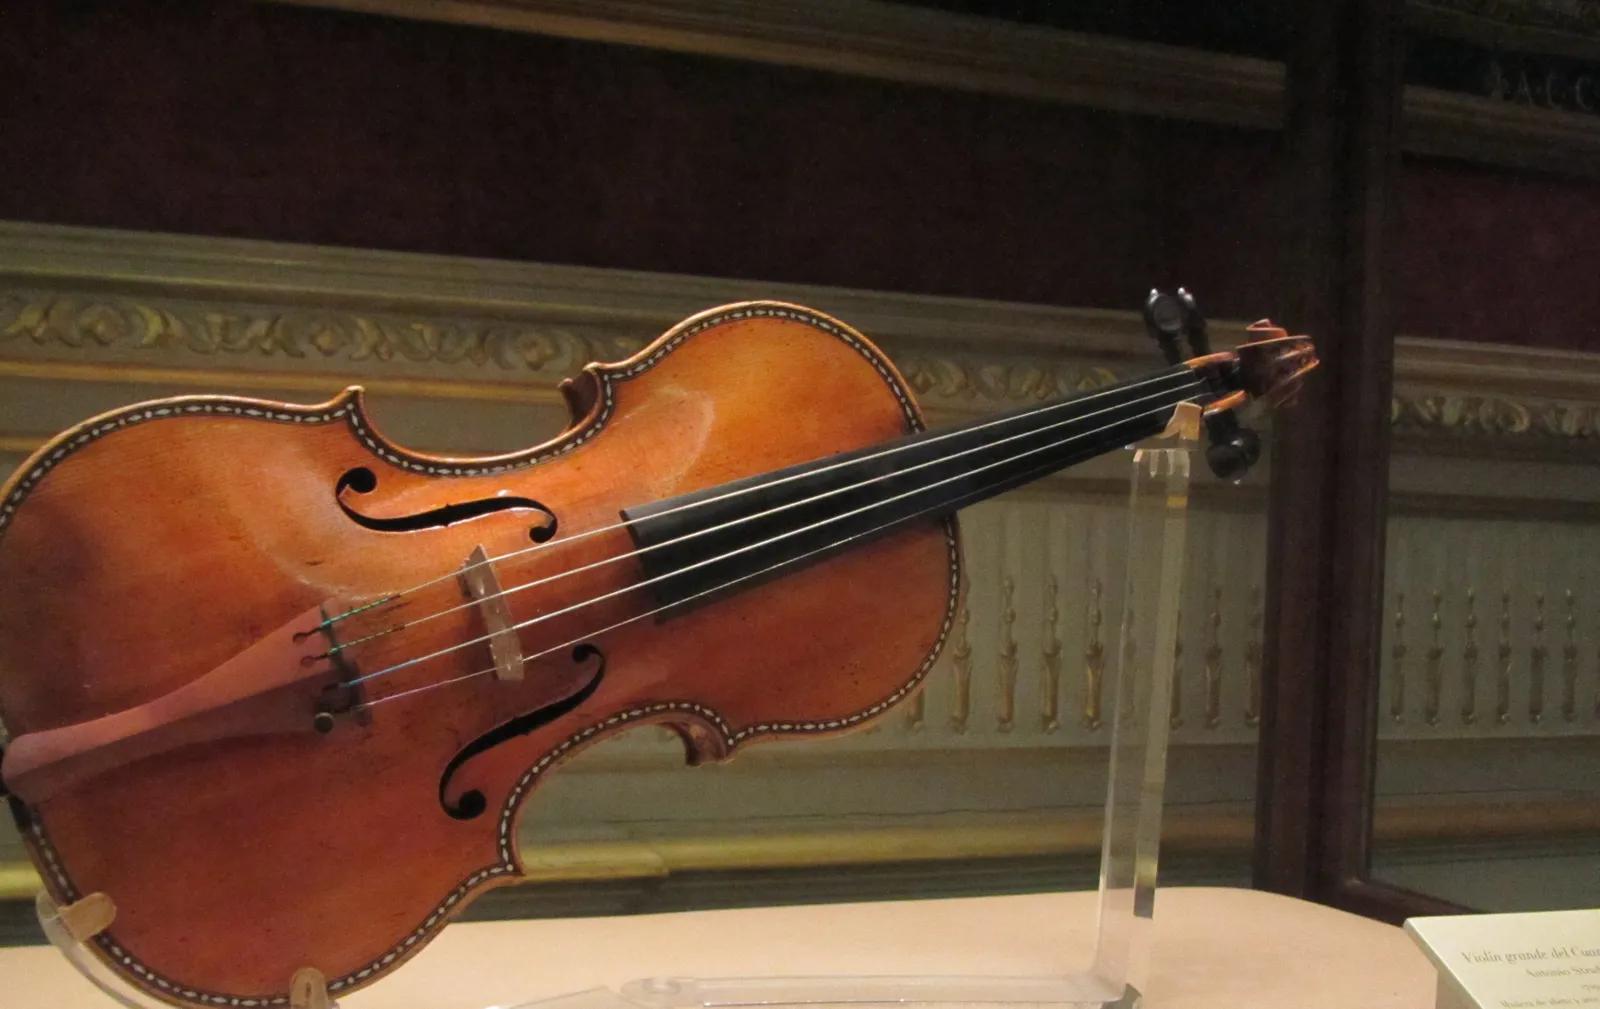 list of stradivarius violins - How many Stradivarius violins are there